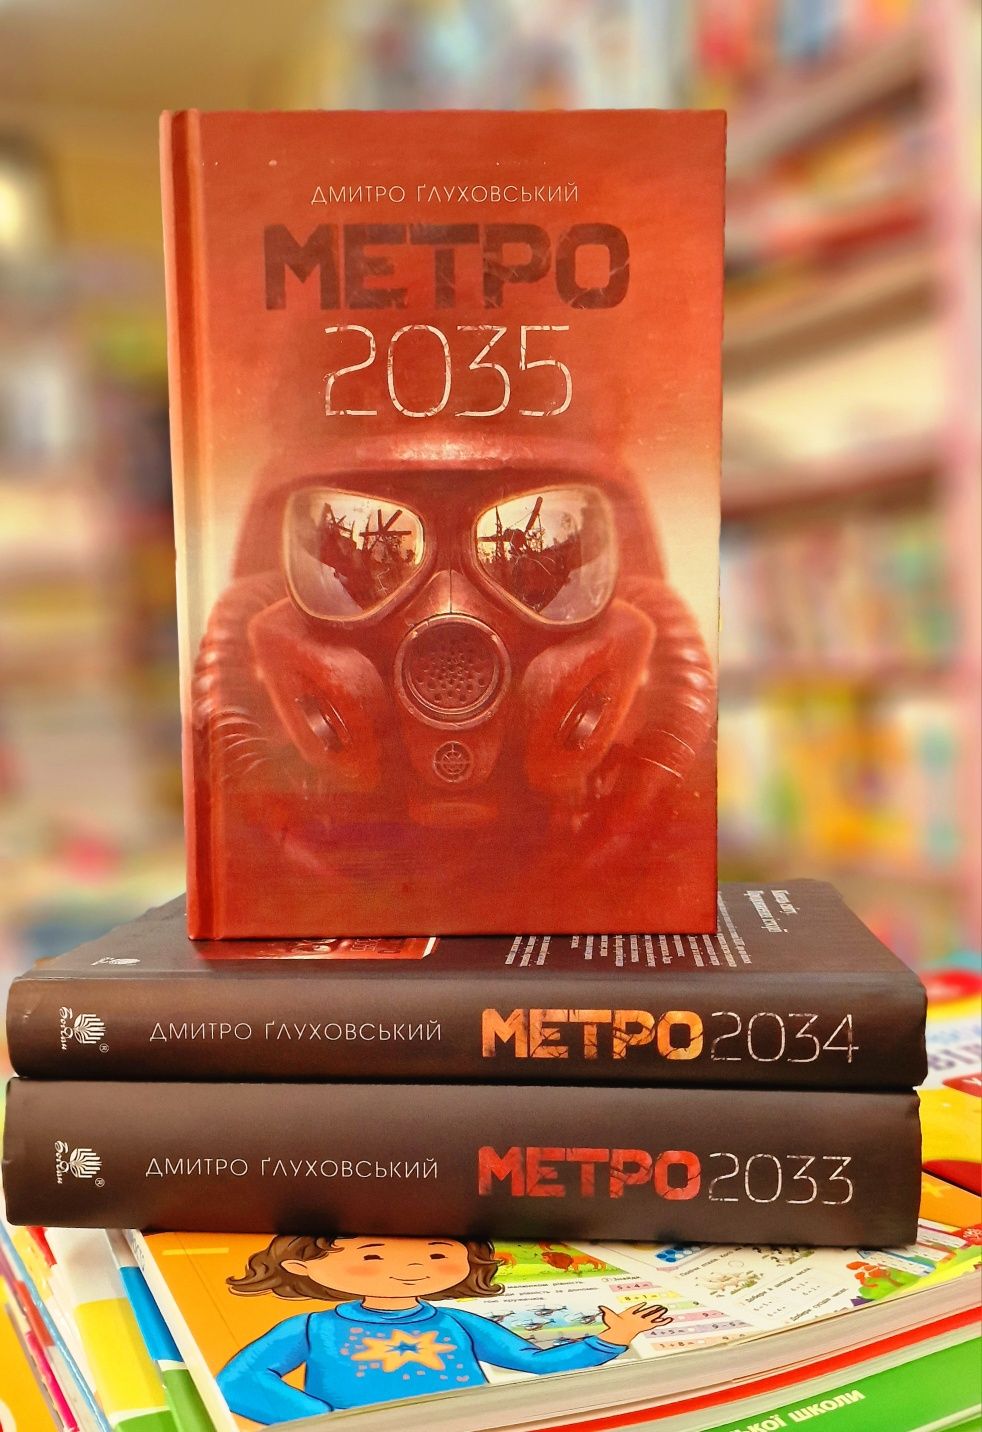 Метро в твёрдом переплете на украинском языке 2033,2034,2035